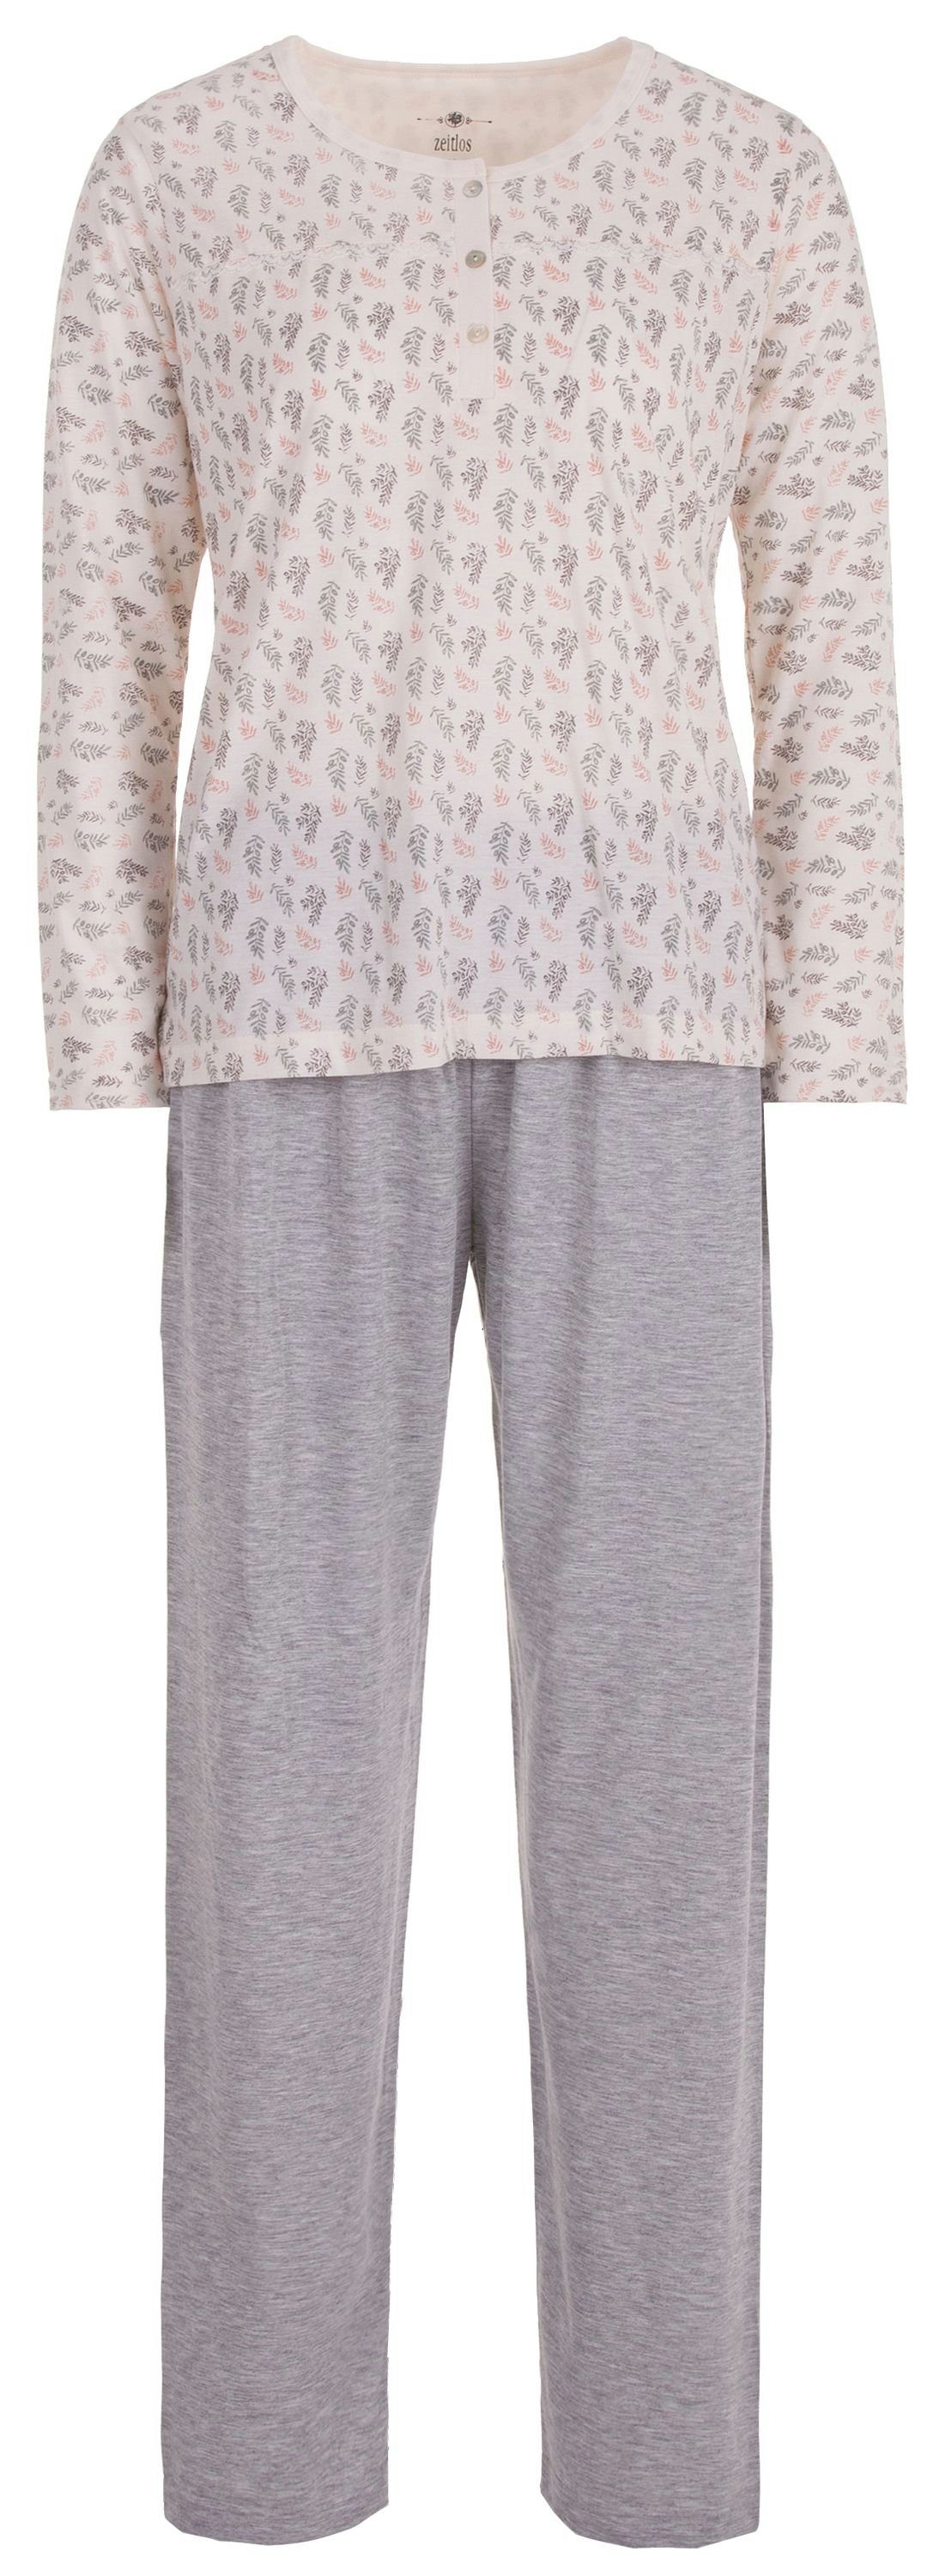 Langarm Set zeitlos Schlafanzug Zweige rosa - Pyjama